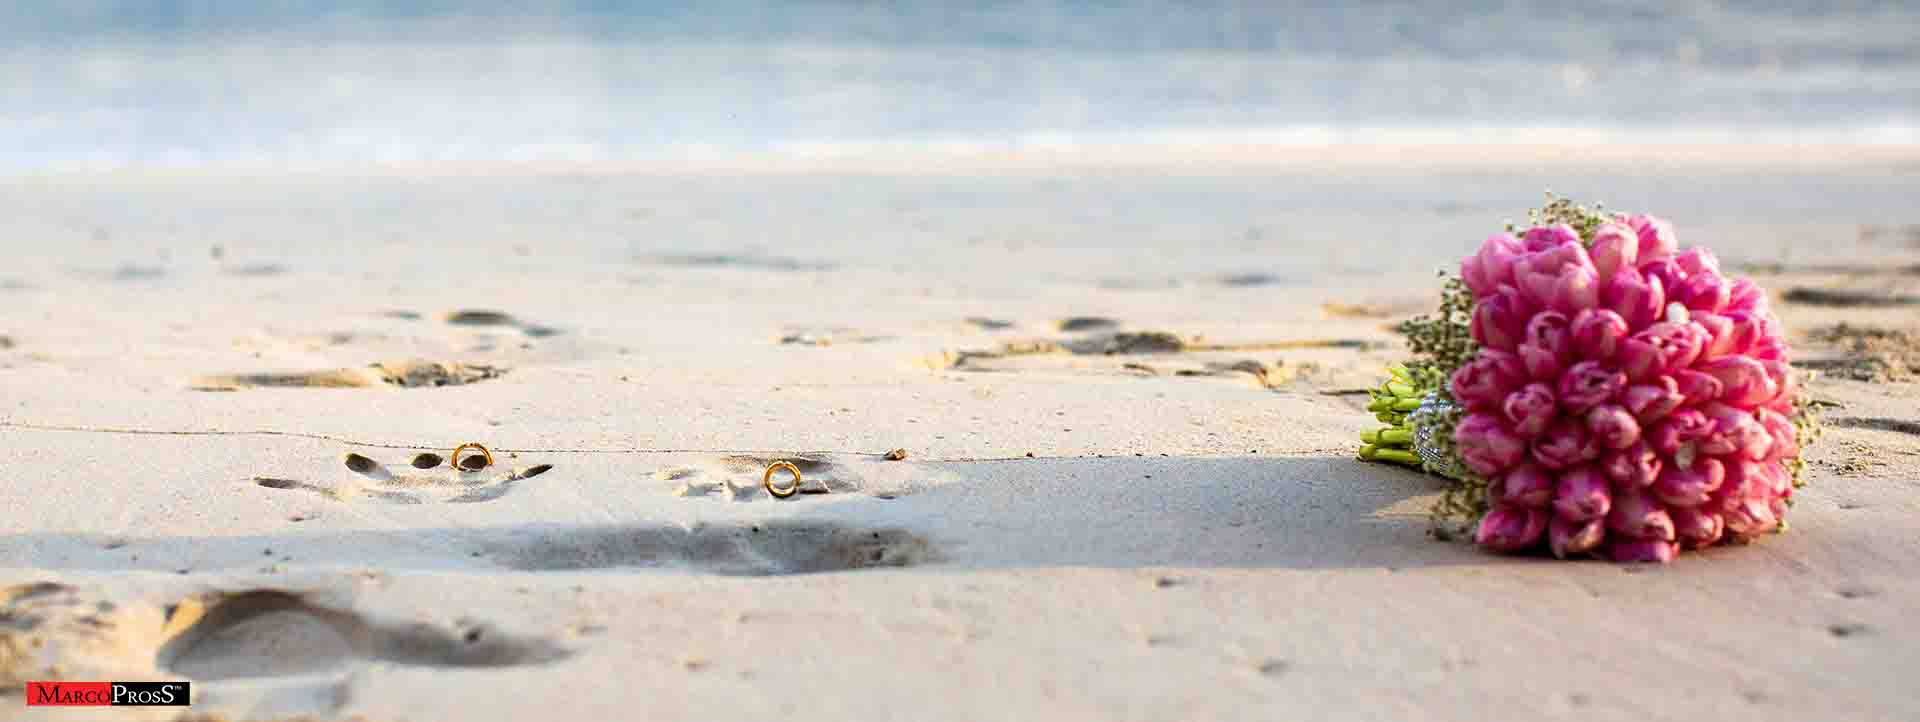 wedding in seyschelles - wedding rings in a sand